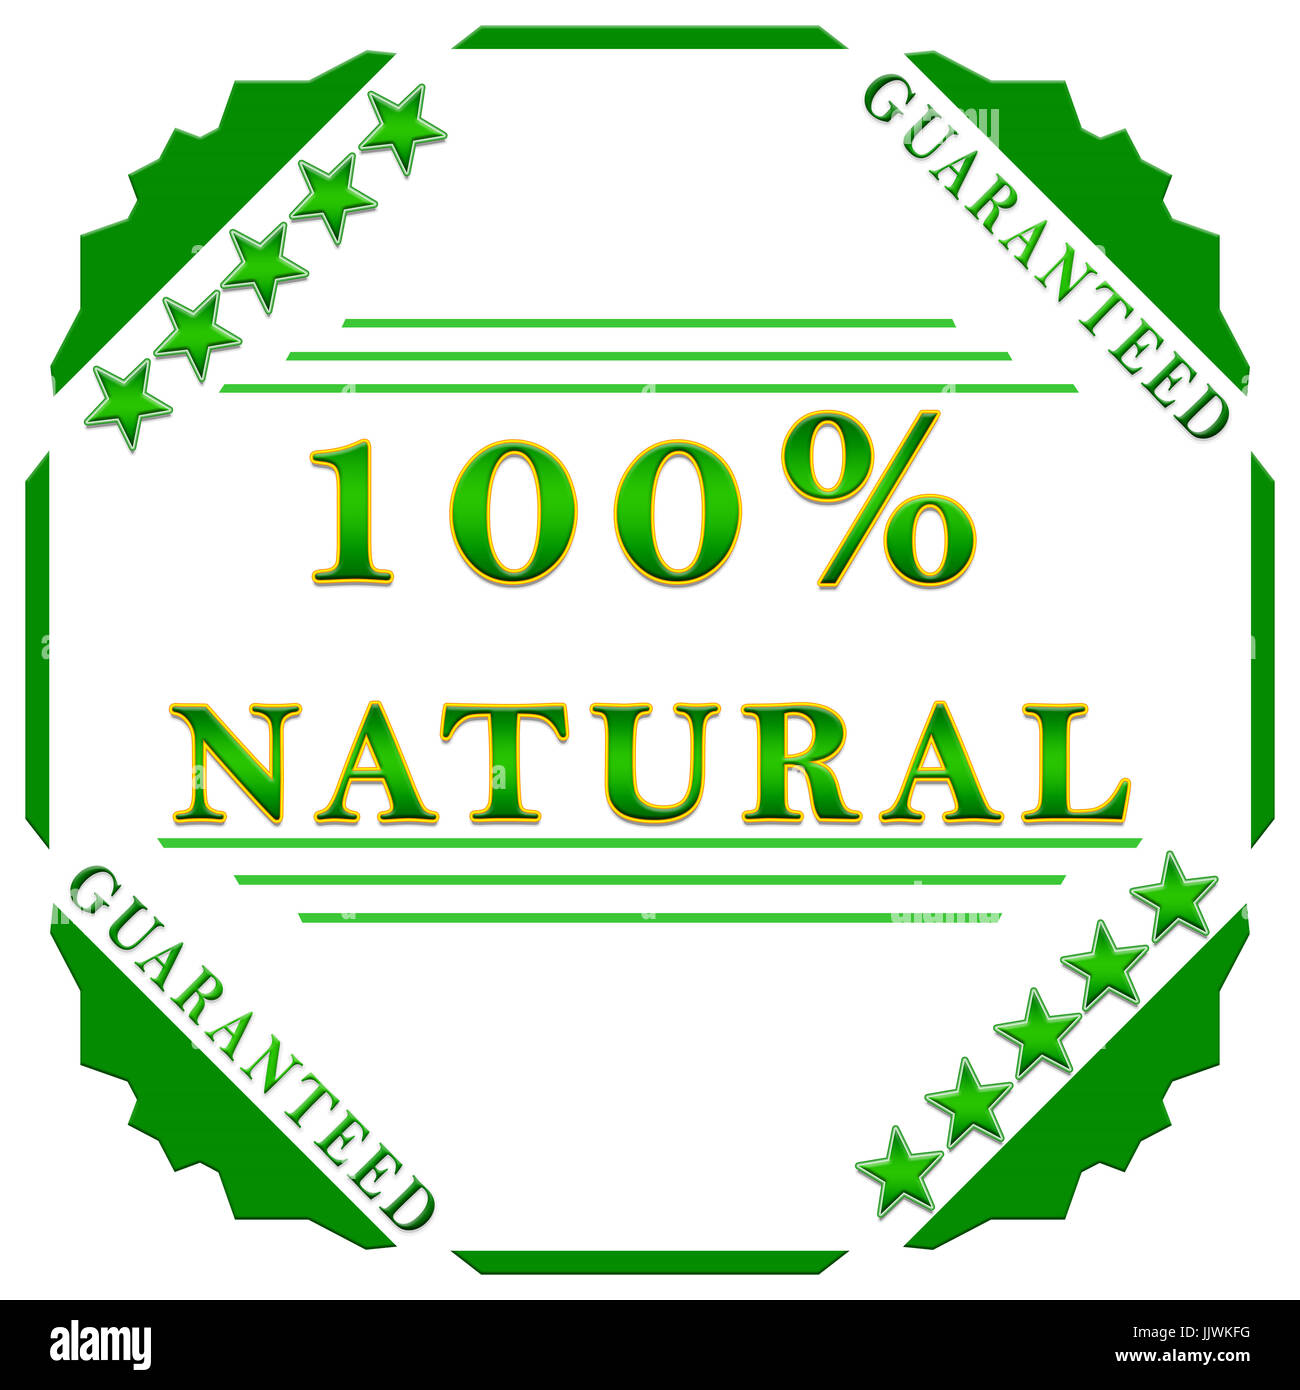 100 percent natural guaranteed badge on white background Stock Photo